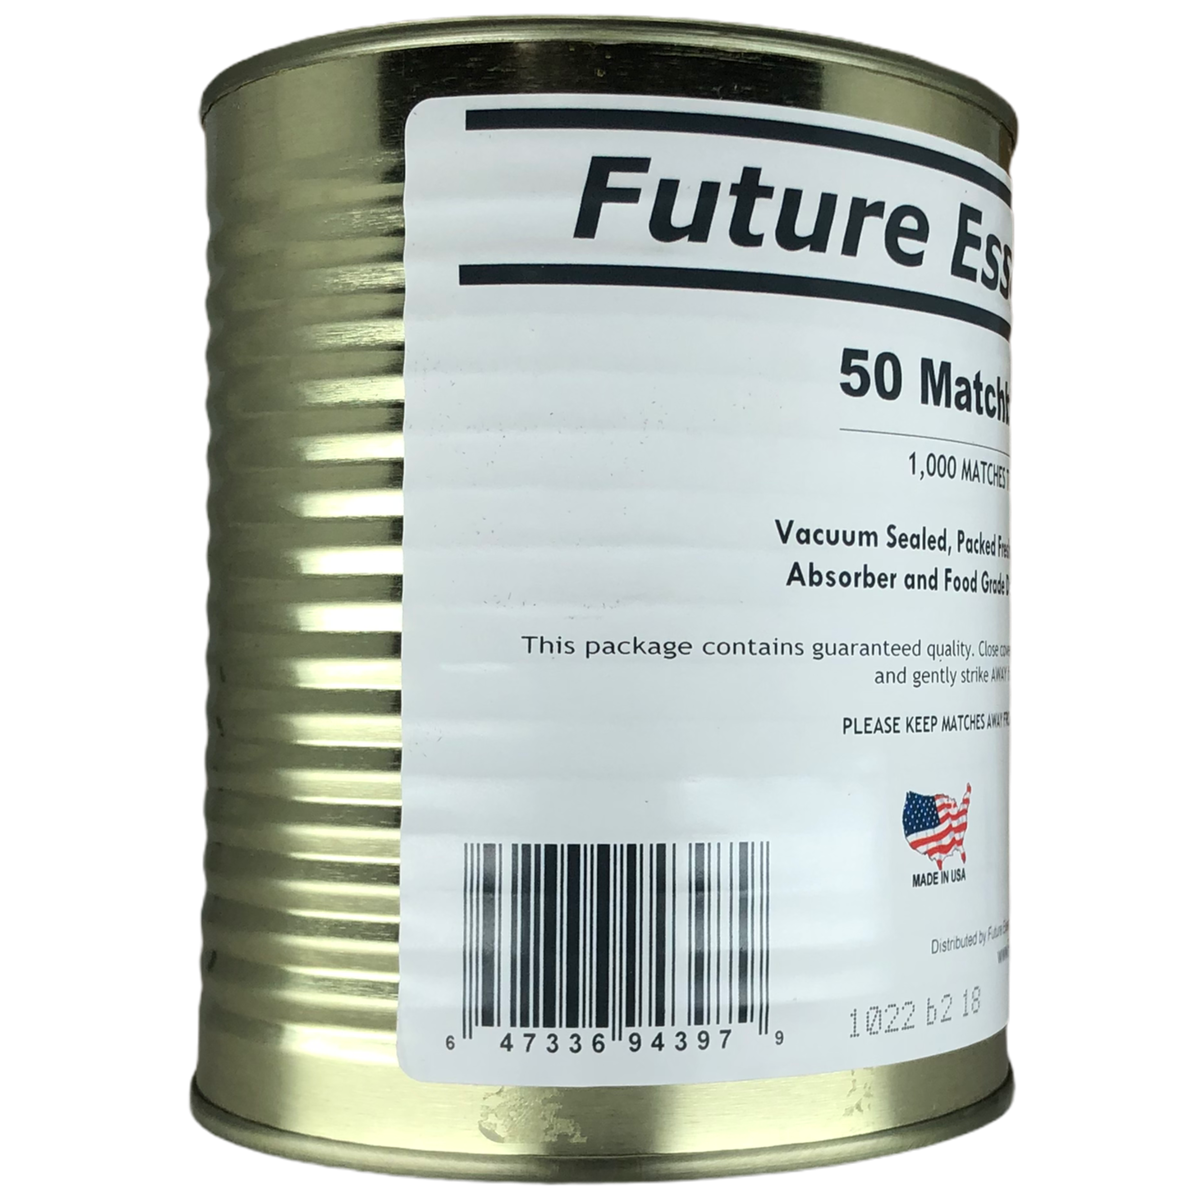 Can of Future Essentials 50 Matchbooks